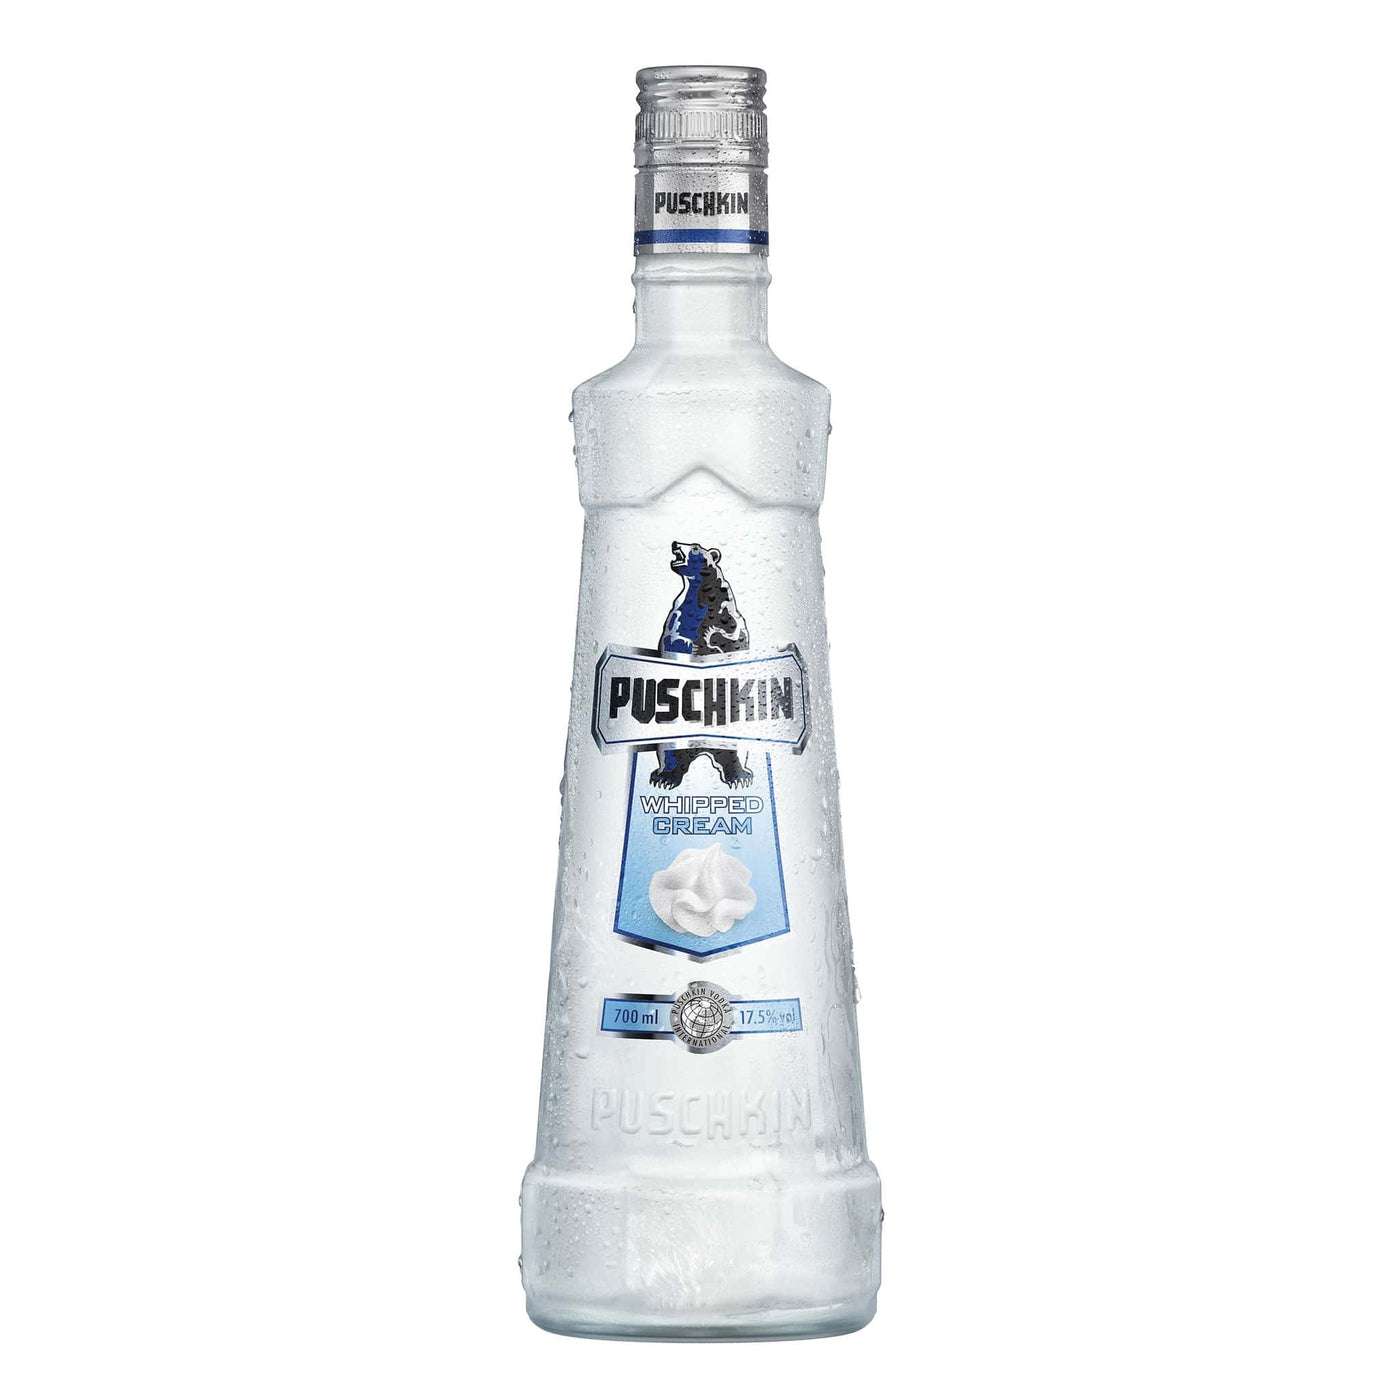 Puschkin Whipped Cream Vodka - Spiritly